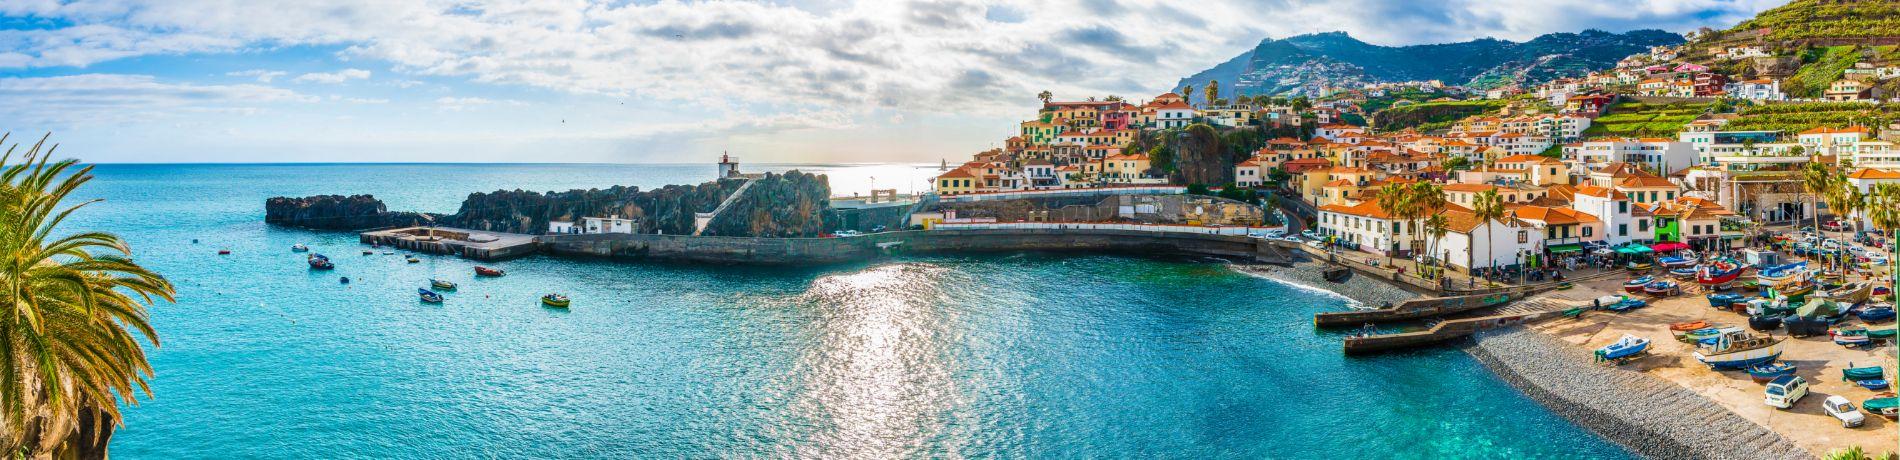 Madeira, Portogallo | Eden viaggi